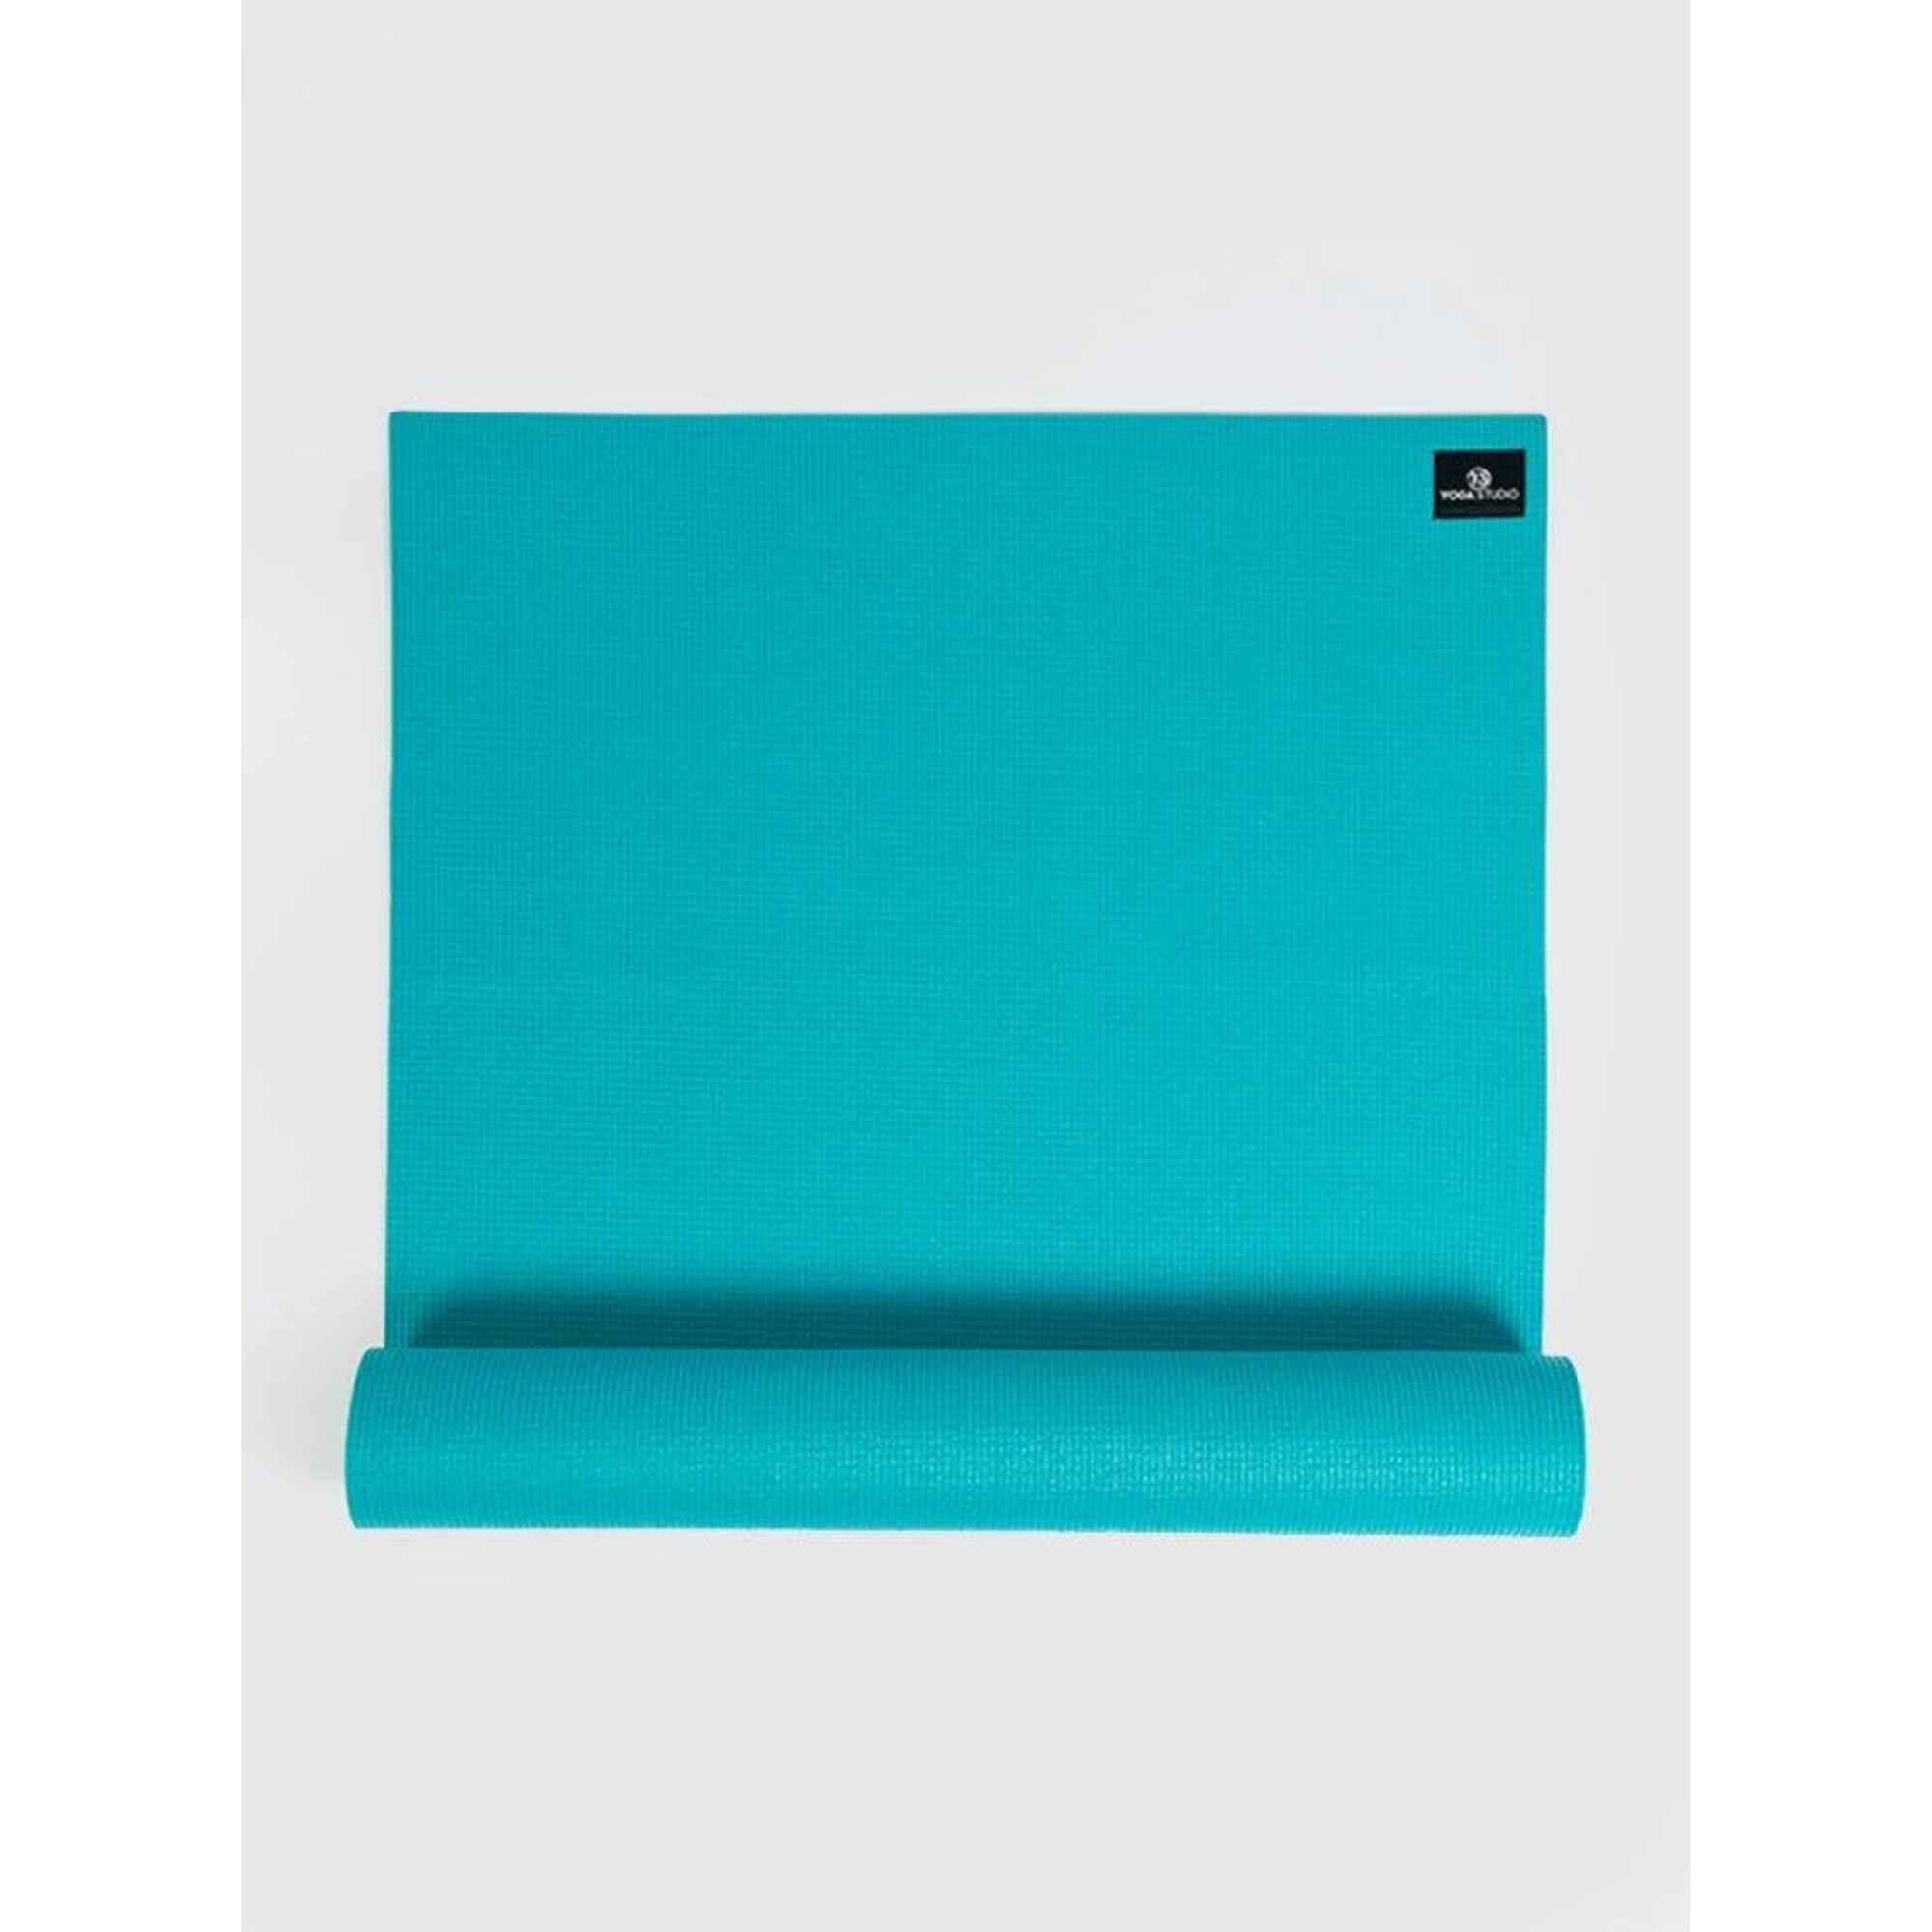 YOGA STUDIO The Yoga Studio Lite 4.5mm Sticky Yoga Mat - Turquoise